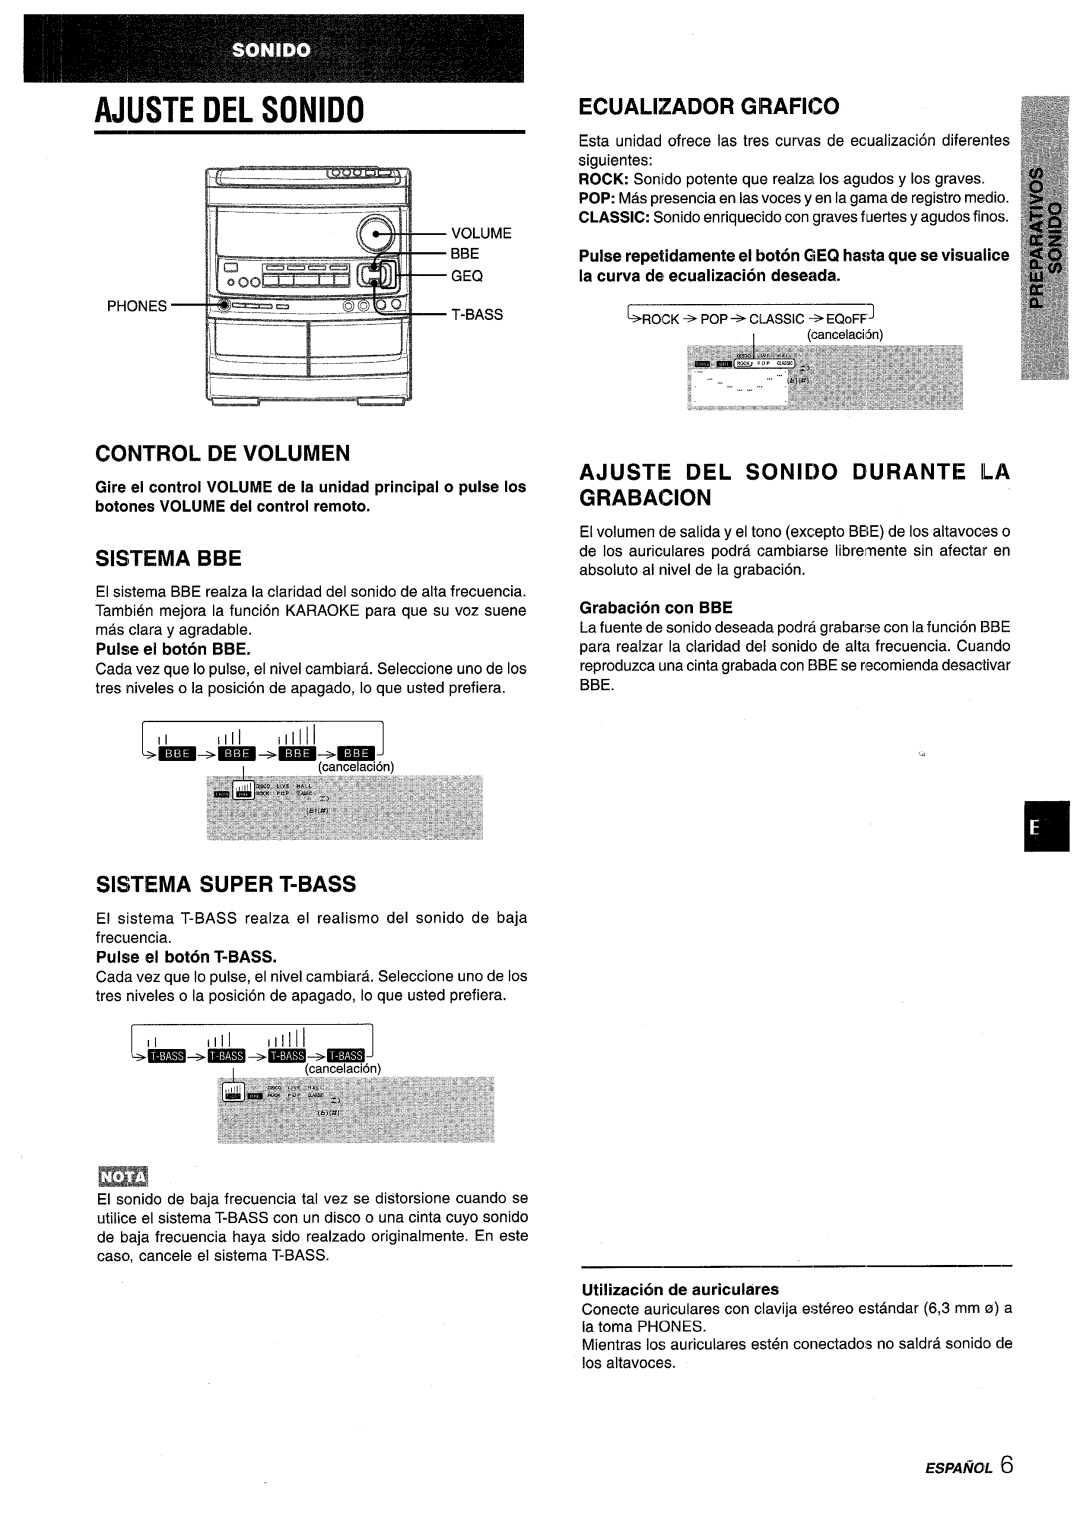 Aiwa NSX-V9000 manual Ajuste Del Sonido, ECUALliZADOR GRAFICO, Control De Volumen, Sistema Bbe, Sistema Super T-Bass 